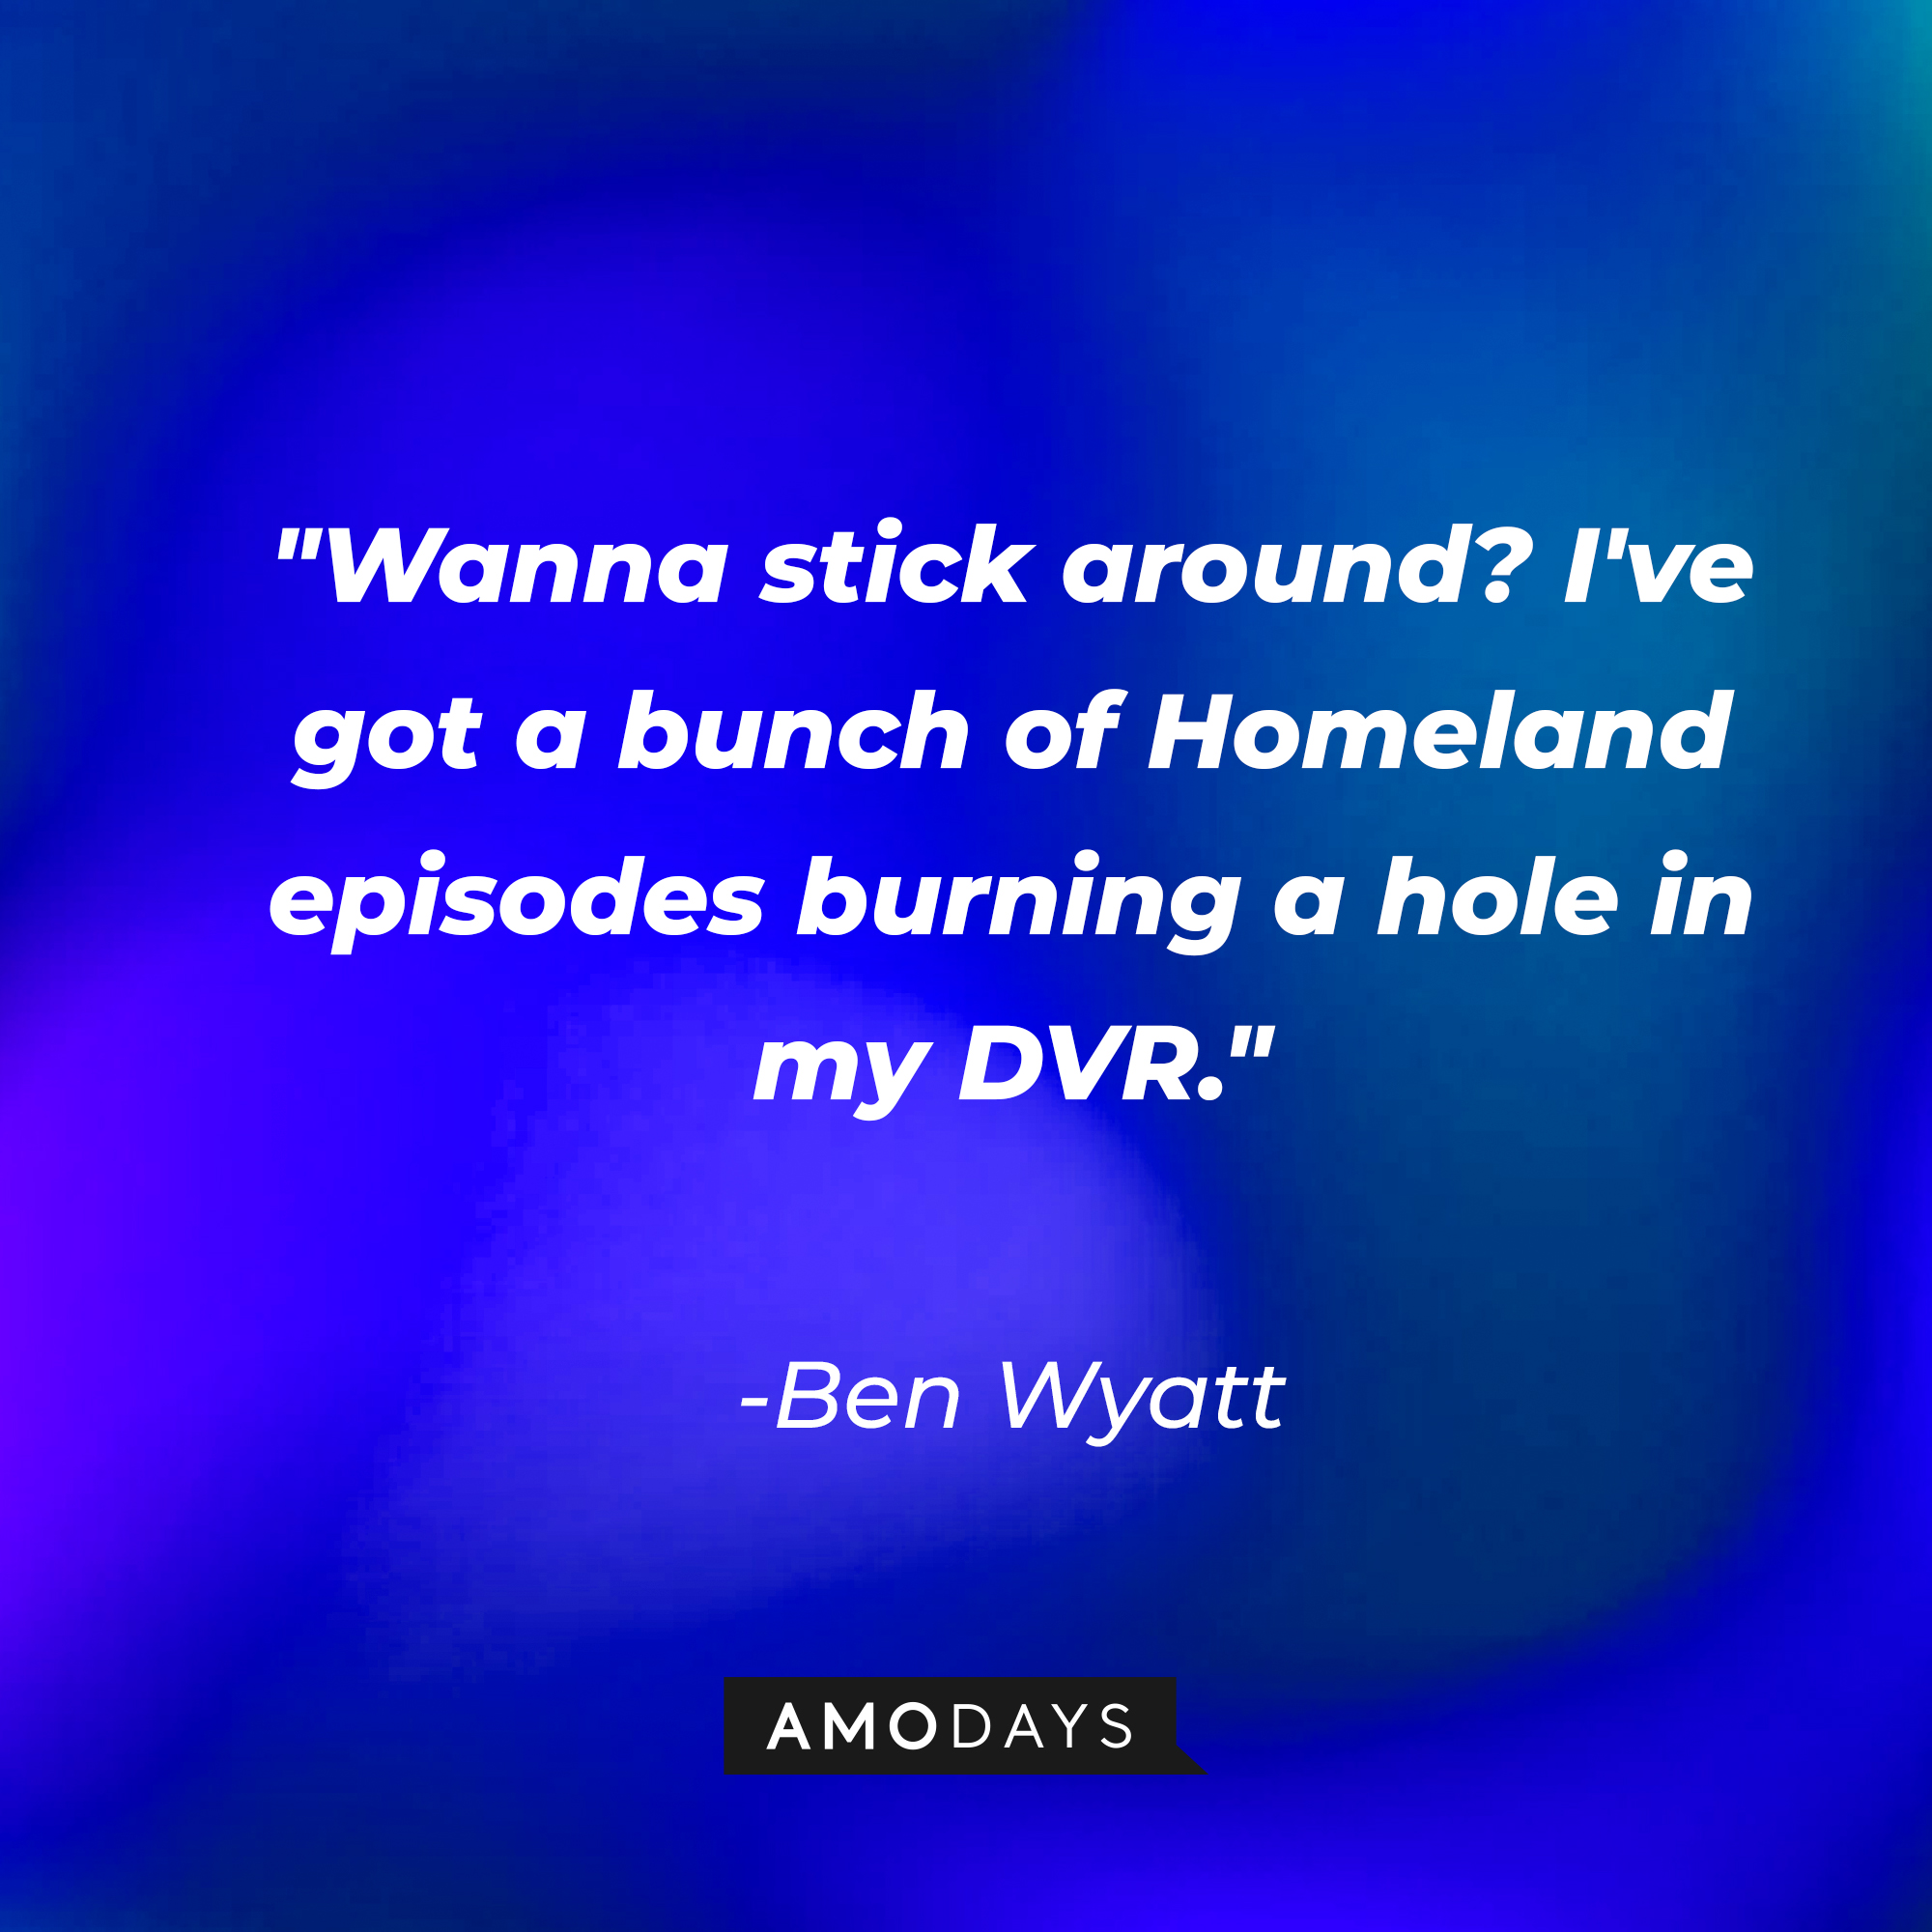 Ben Wyatt's quote: "Wanna stick around? I've got a bunch of Homeland episodes burning a hole in my DVR." | Source: AmoDays